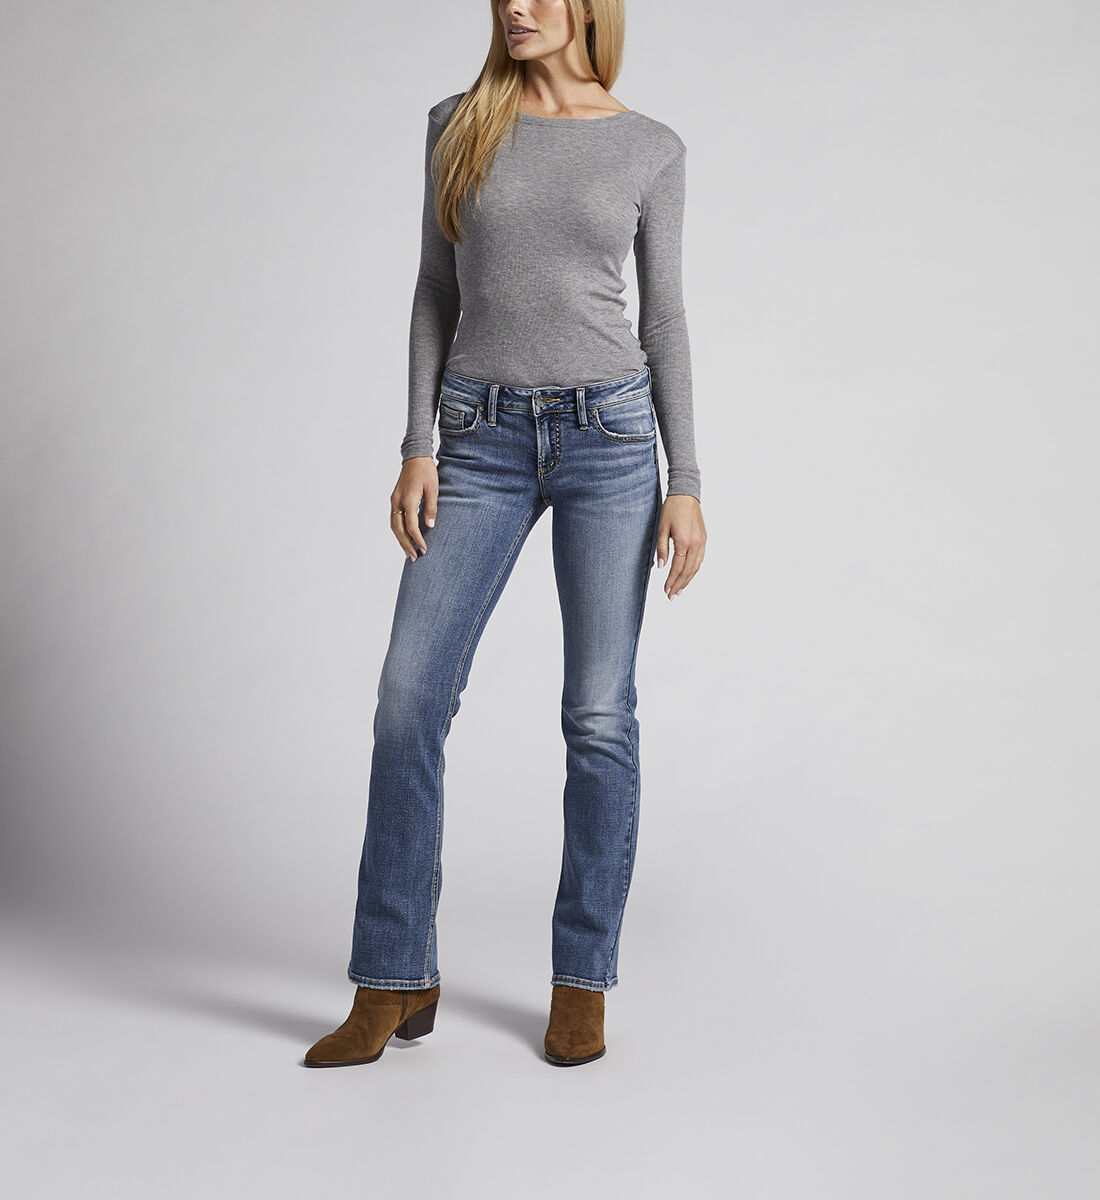 Britt | Womens Low Rise Curvy Jeans | Silver Jeans Co.